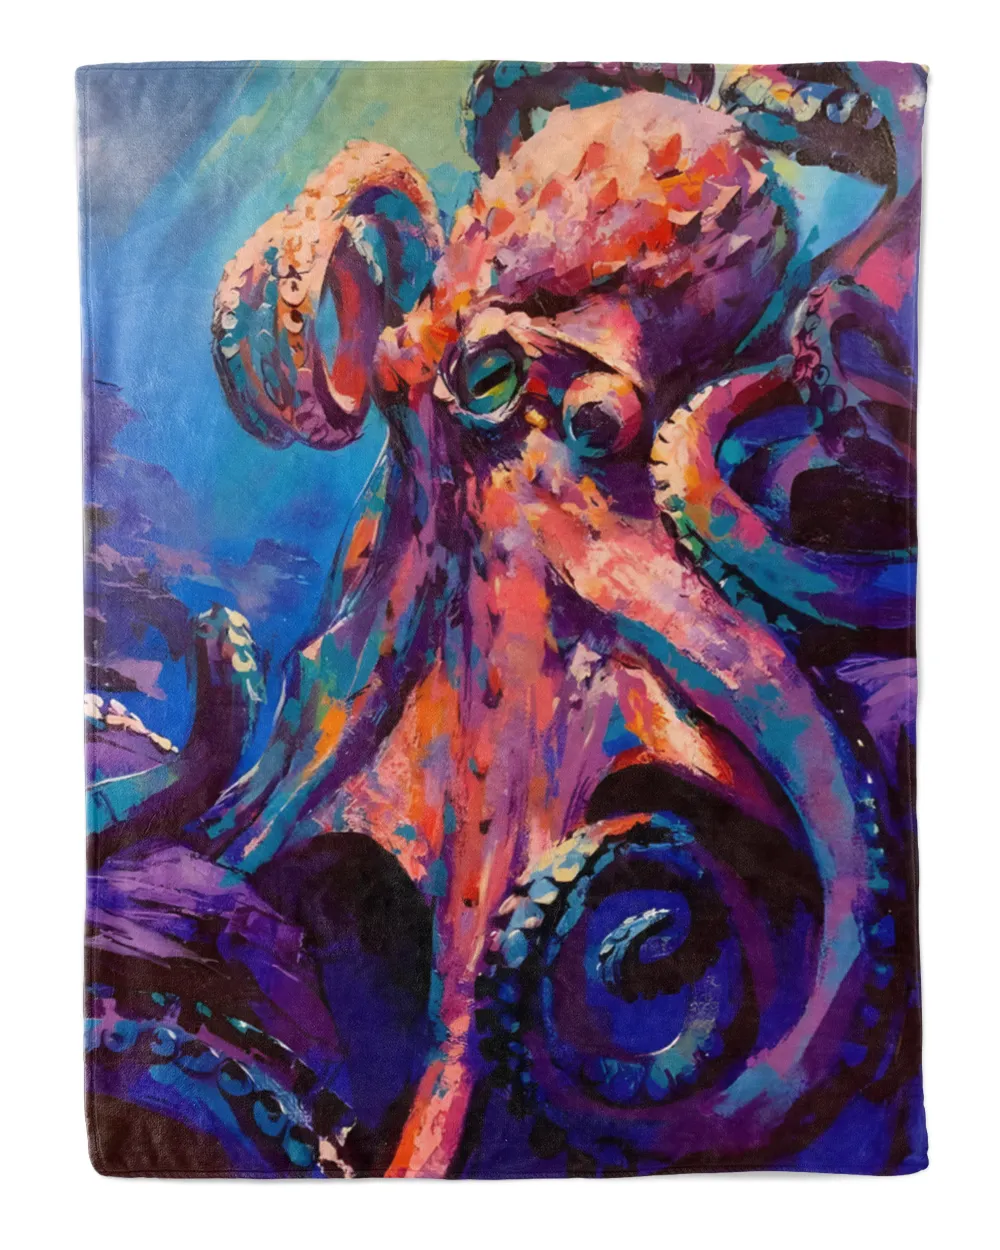 Rainbow Colorful Octopus Blanket